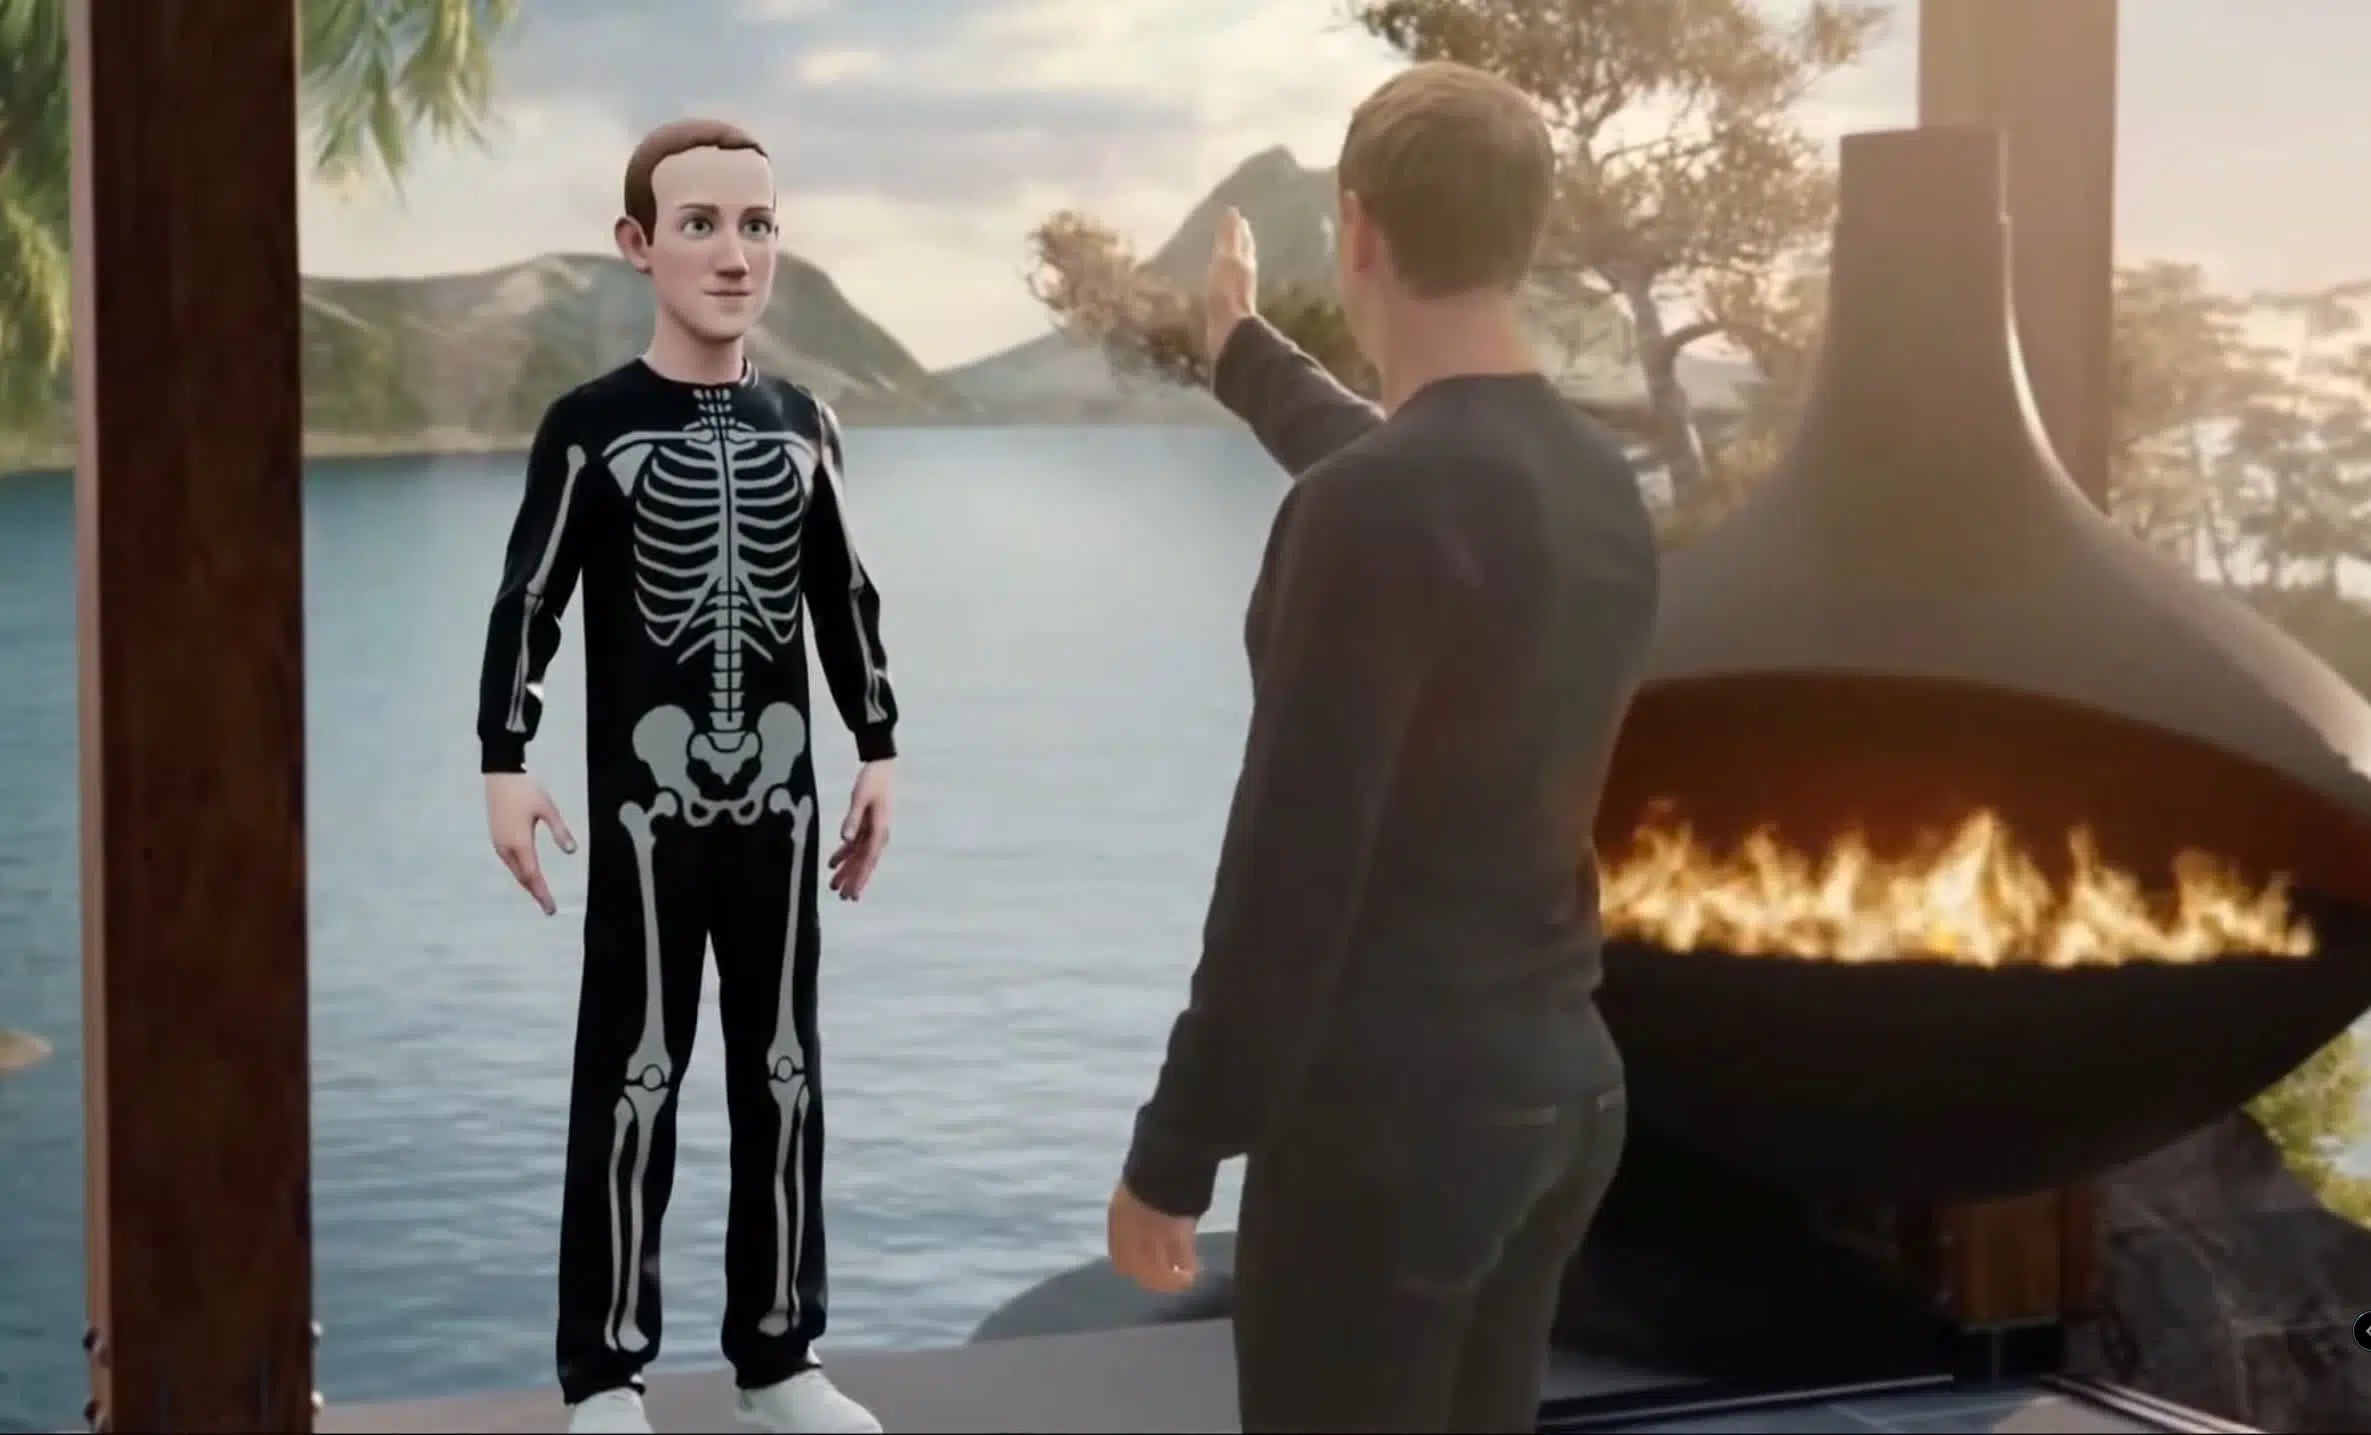 Zuckerbergs' avatar in the metaverse